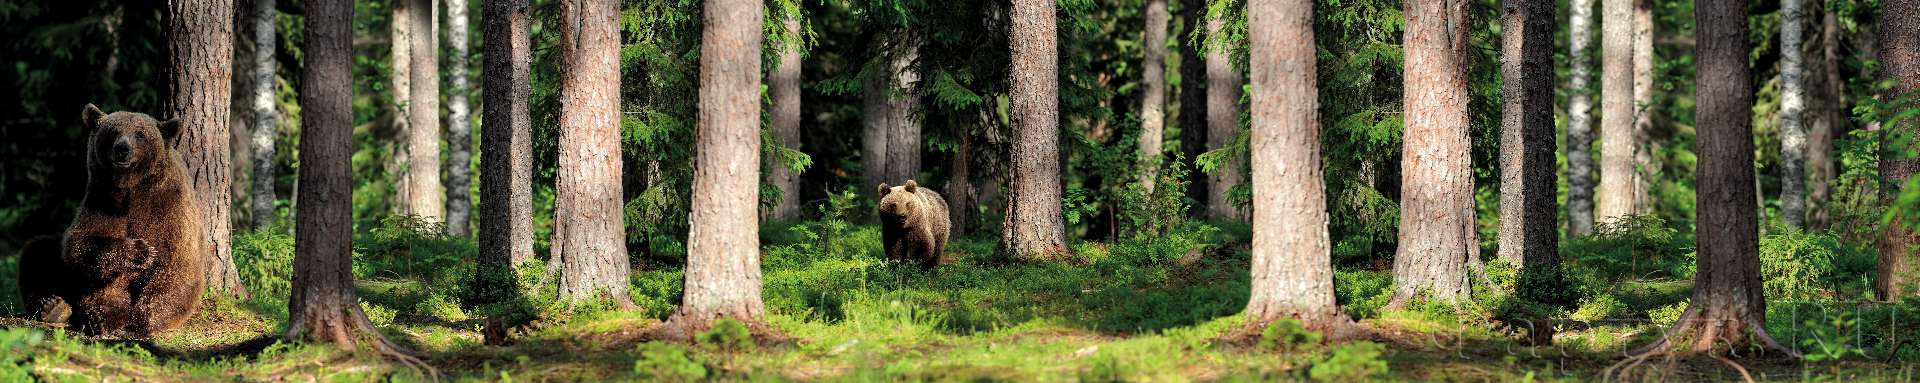 Медведи в лесу